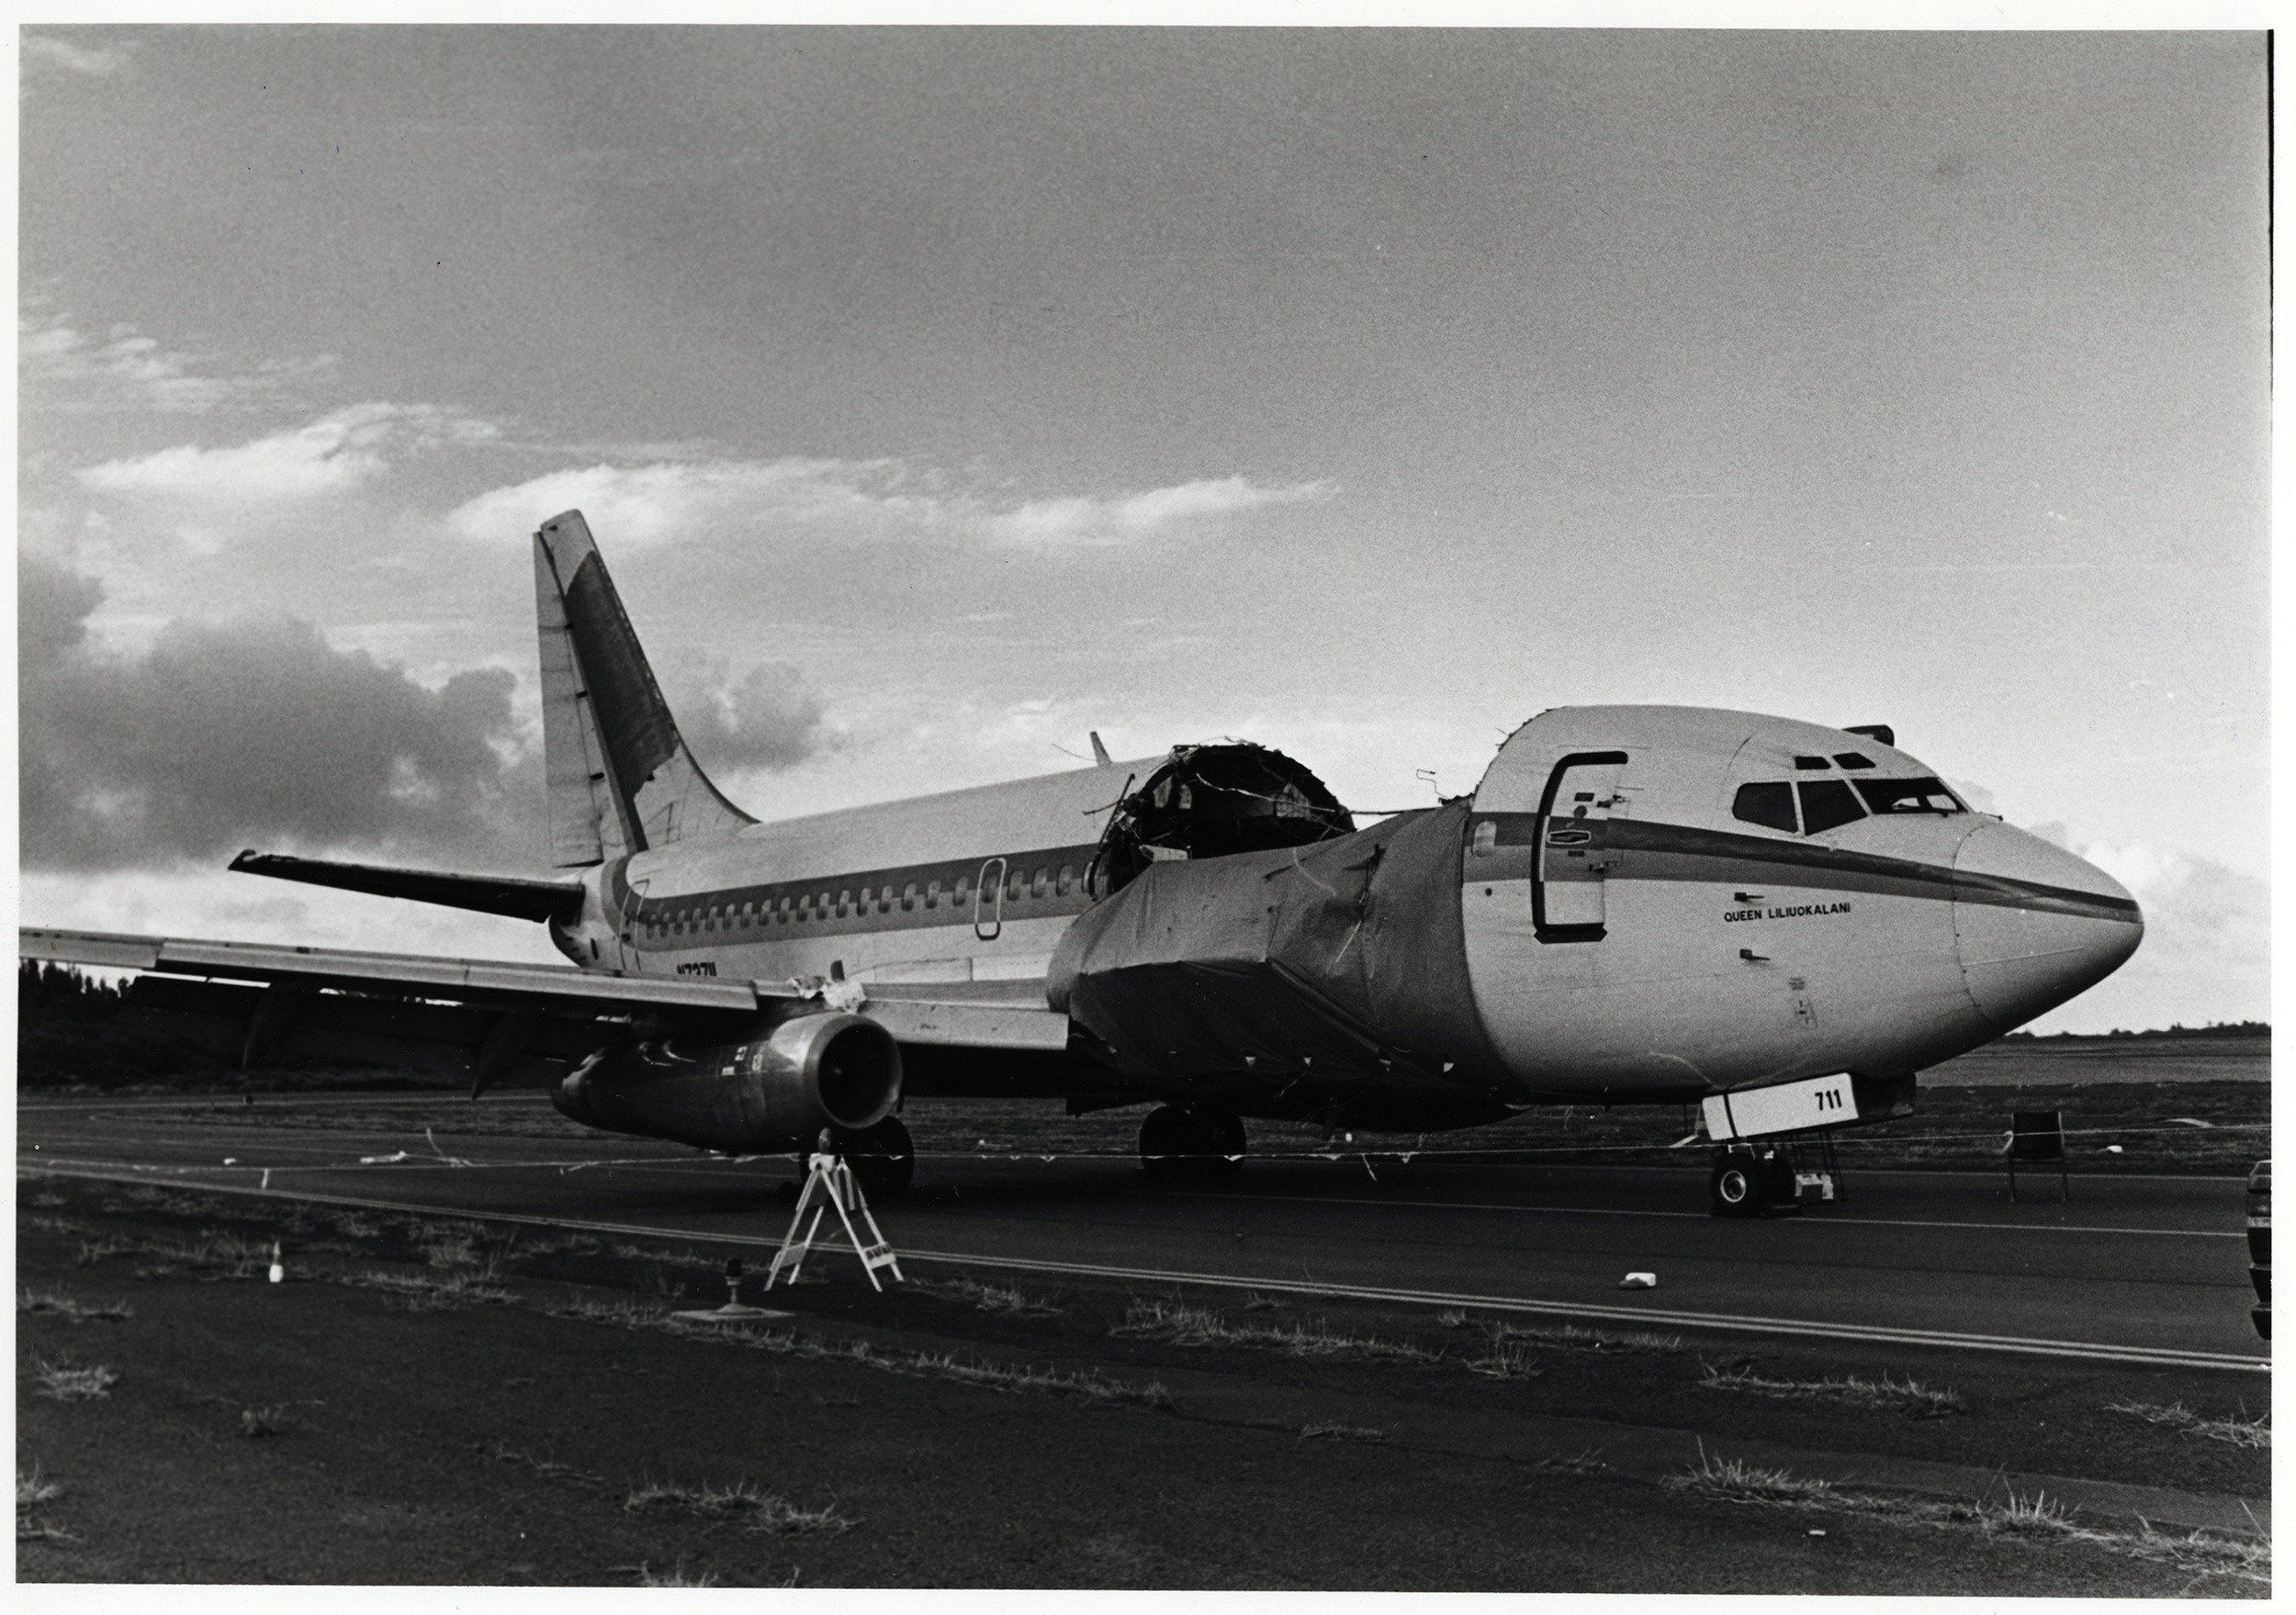 Aloha Airlines Flight 243, April 28, 1988